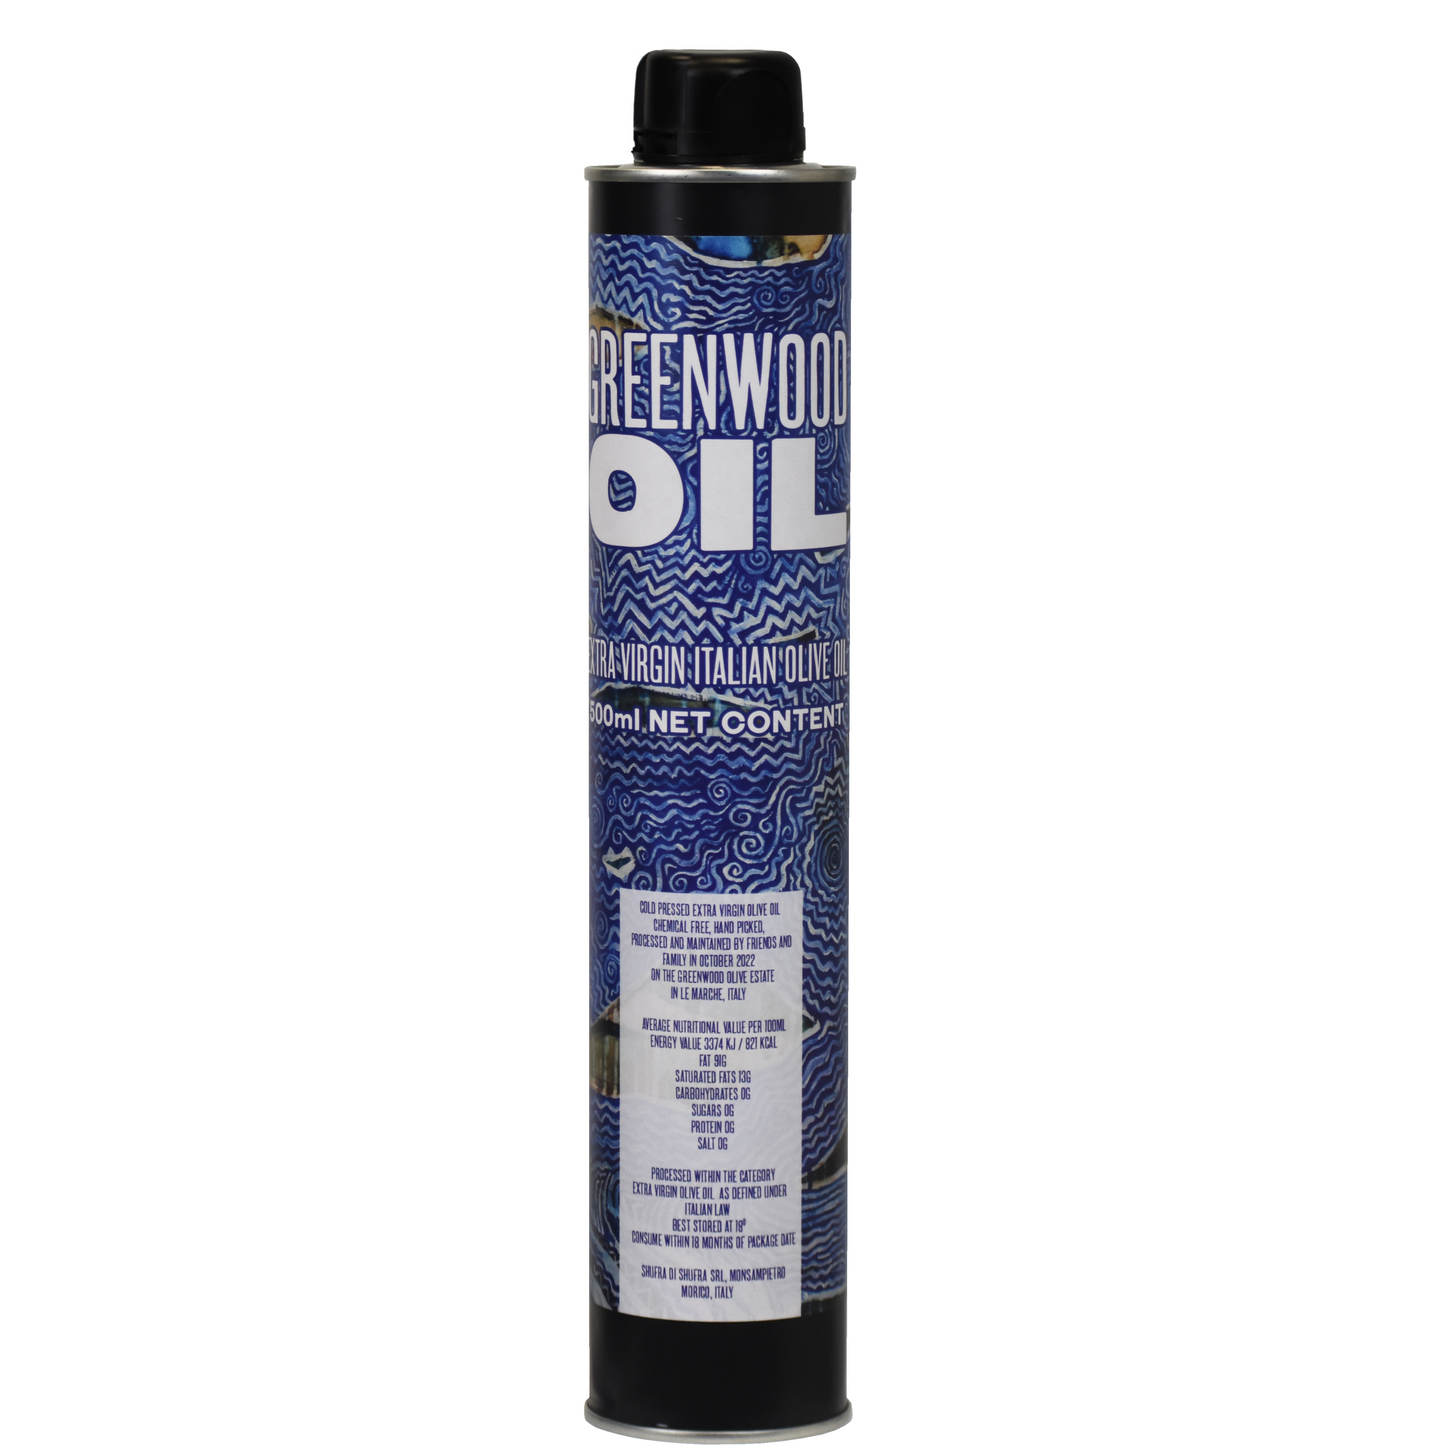 Greenwood Oil